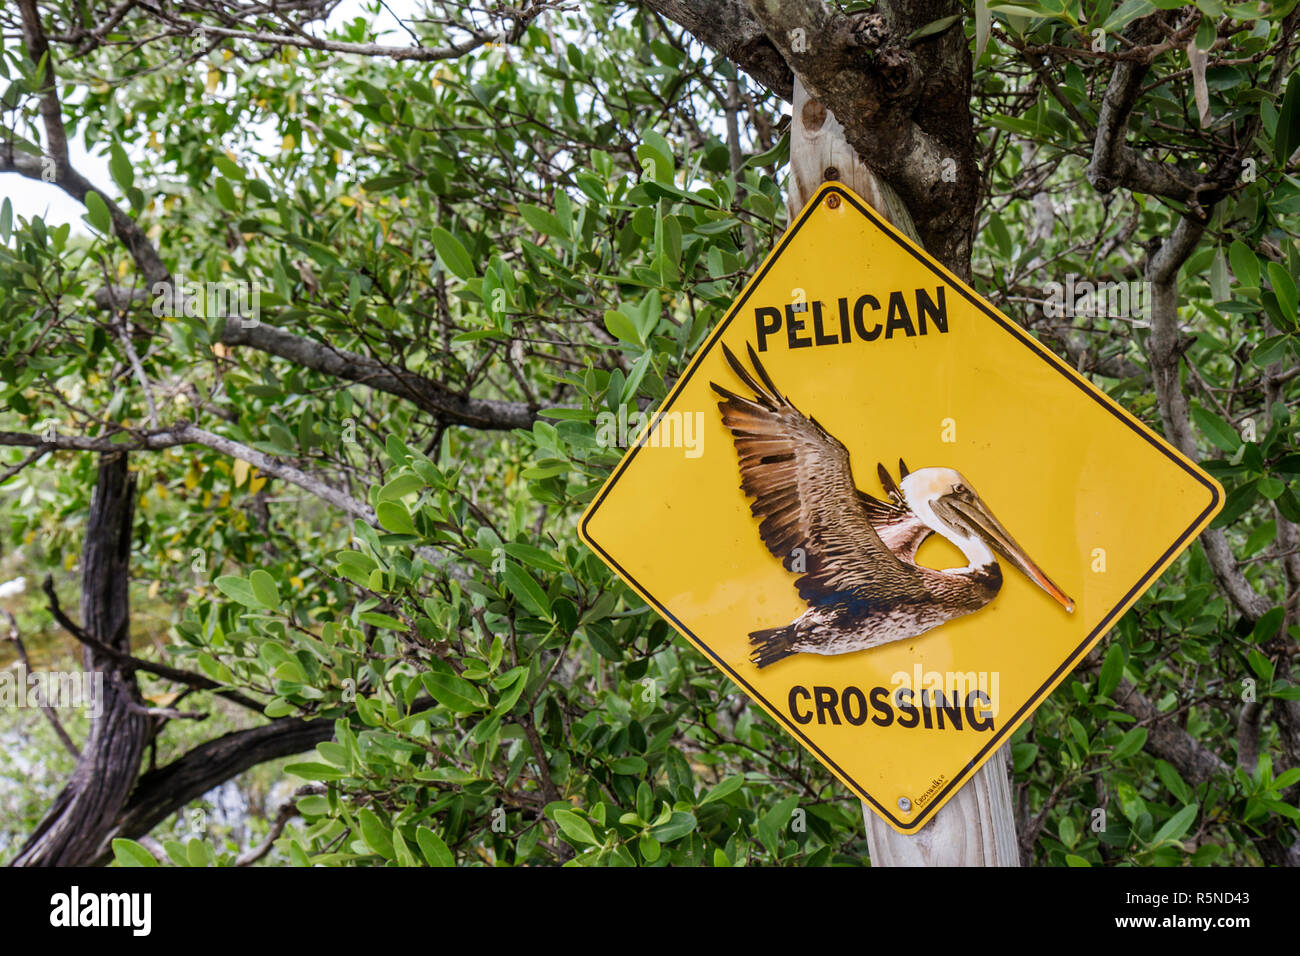 Florida Florida Keys,Tavernier,US highway Route 1,Overseas Highway,Florida Keys Wild Bird Rehabilitation Center,sanctuary,wildlife rescue,traffic,road Stock Photo